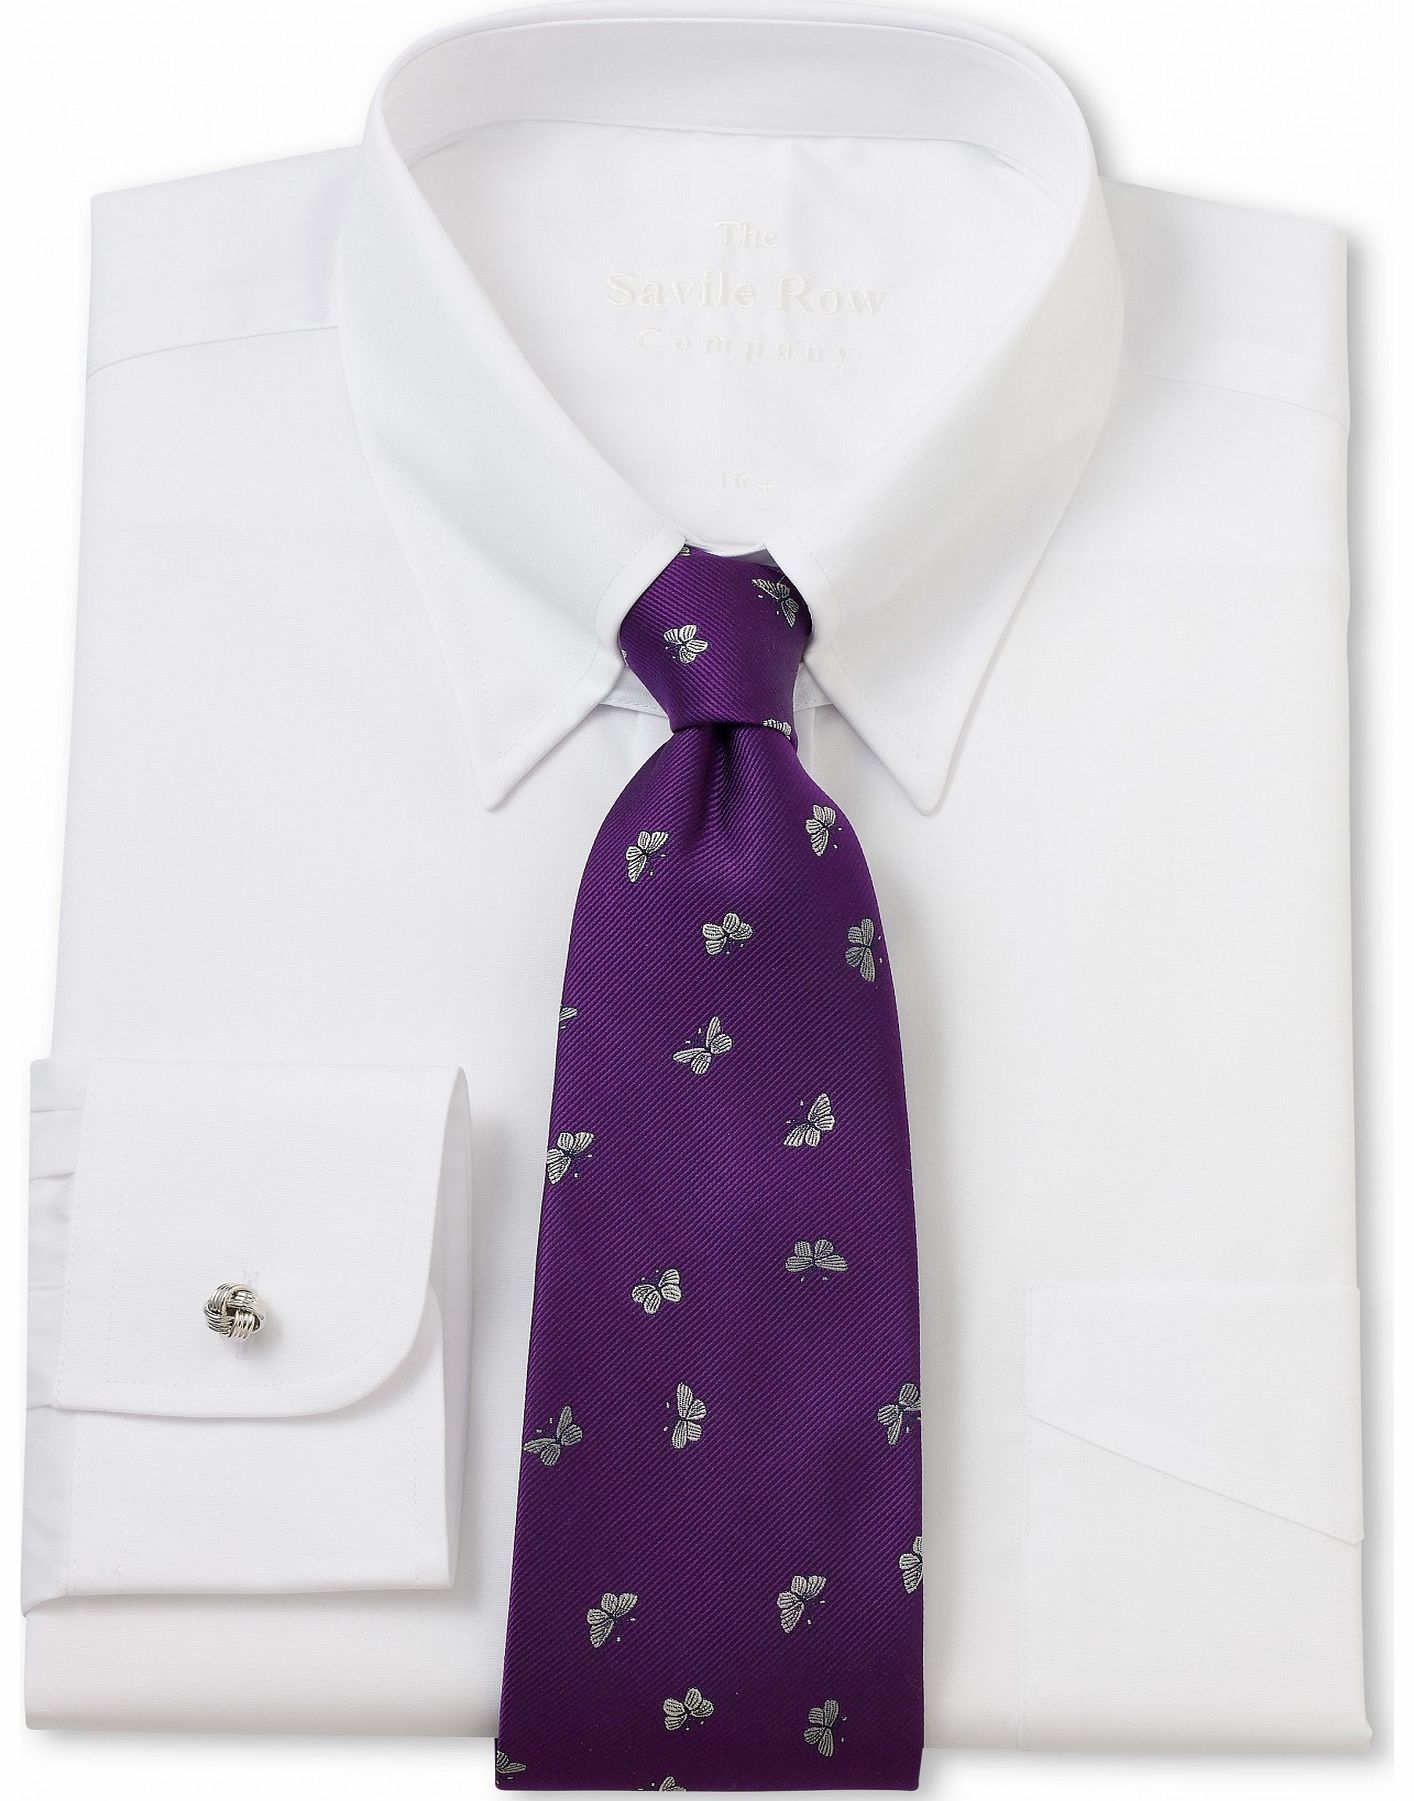 Savile Row Company White Poplin Tab Collar Classic Fit Shirt 20``